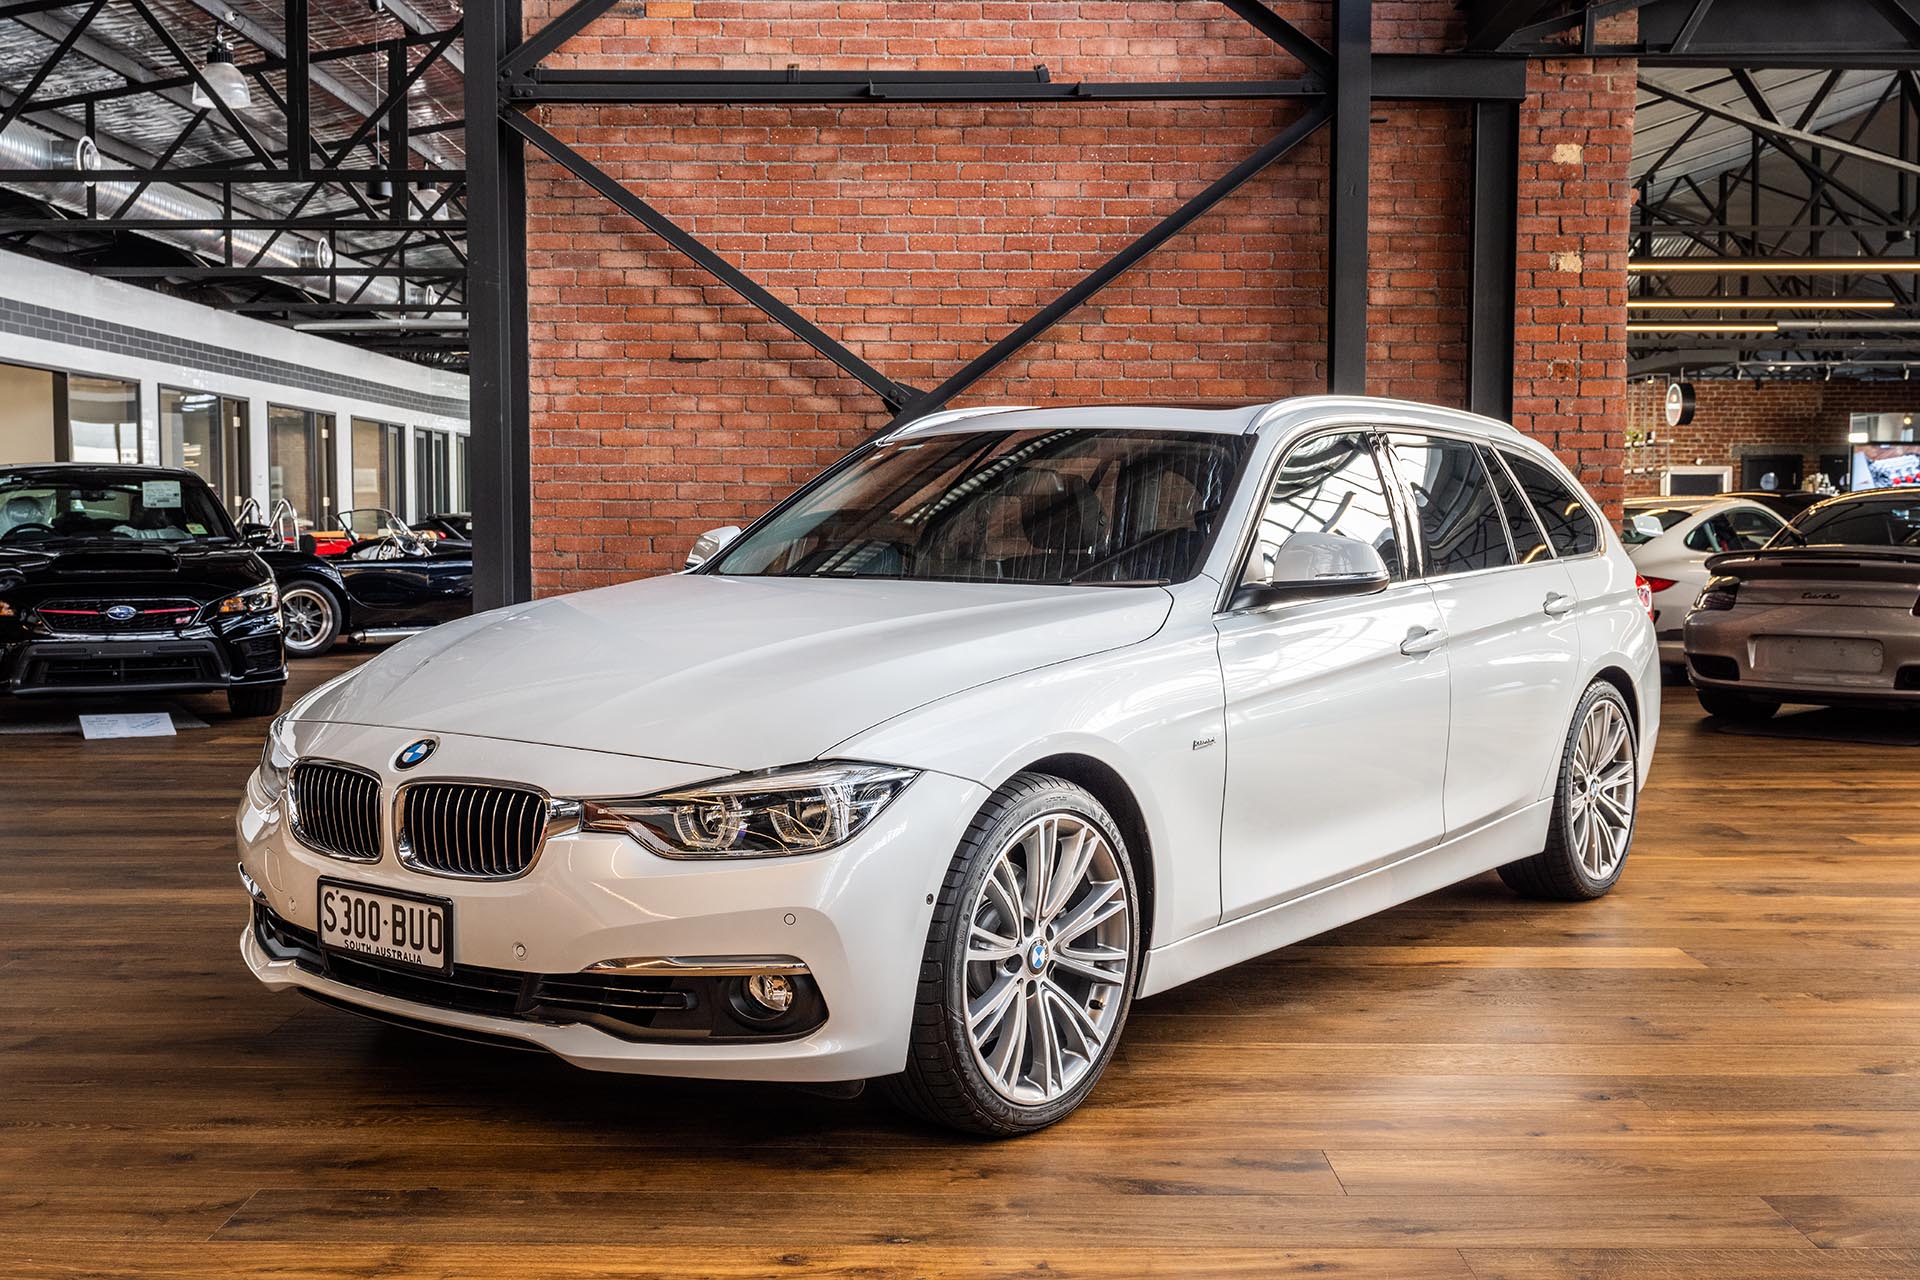 https://richmonds.com.au/wp-content/uploads/2021/09/BMW-330i-White-Touring-3.jpg